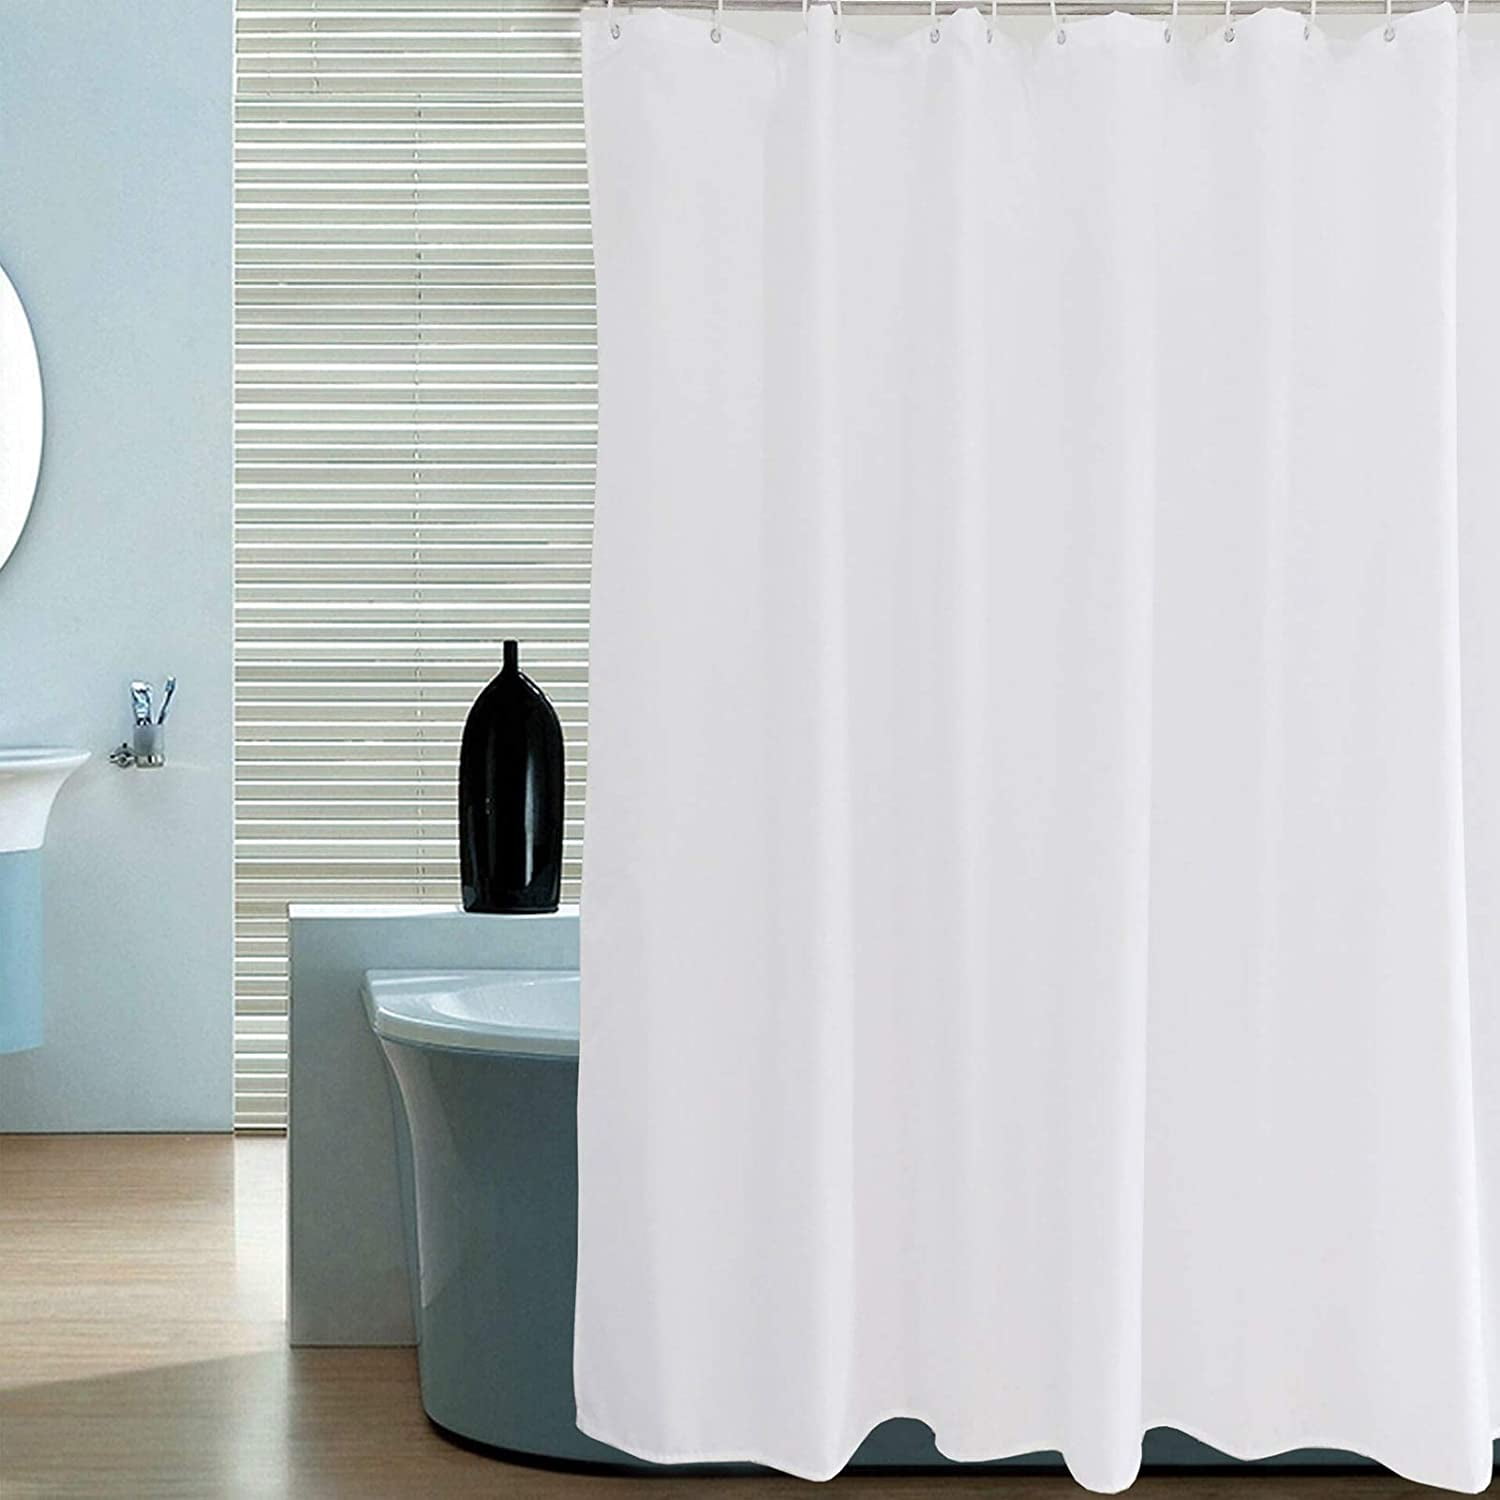 Niuta Shower Liner Standard, Should Shower Curtain And Liner Be The Same Size